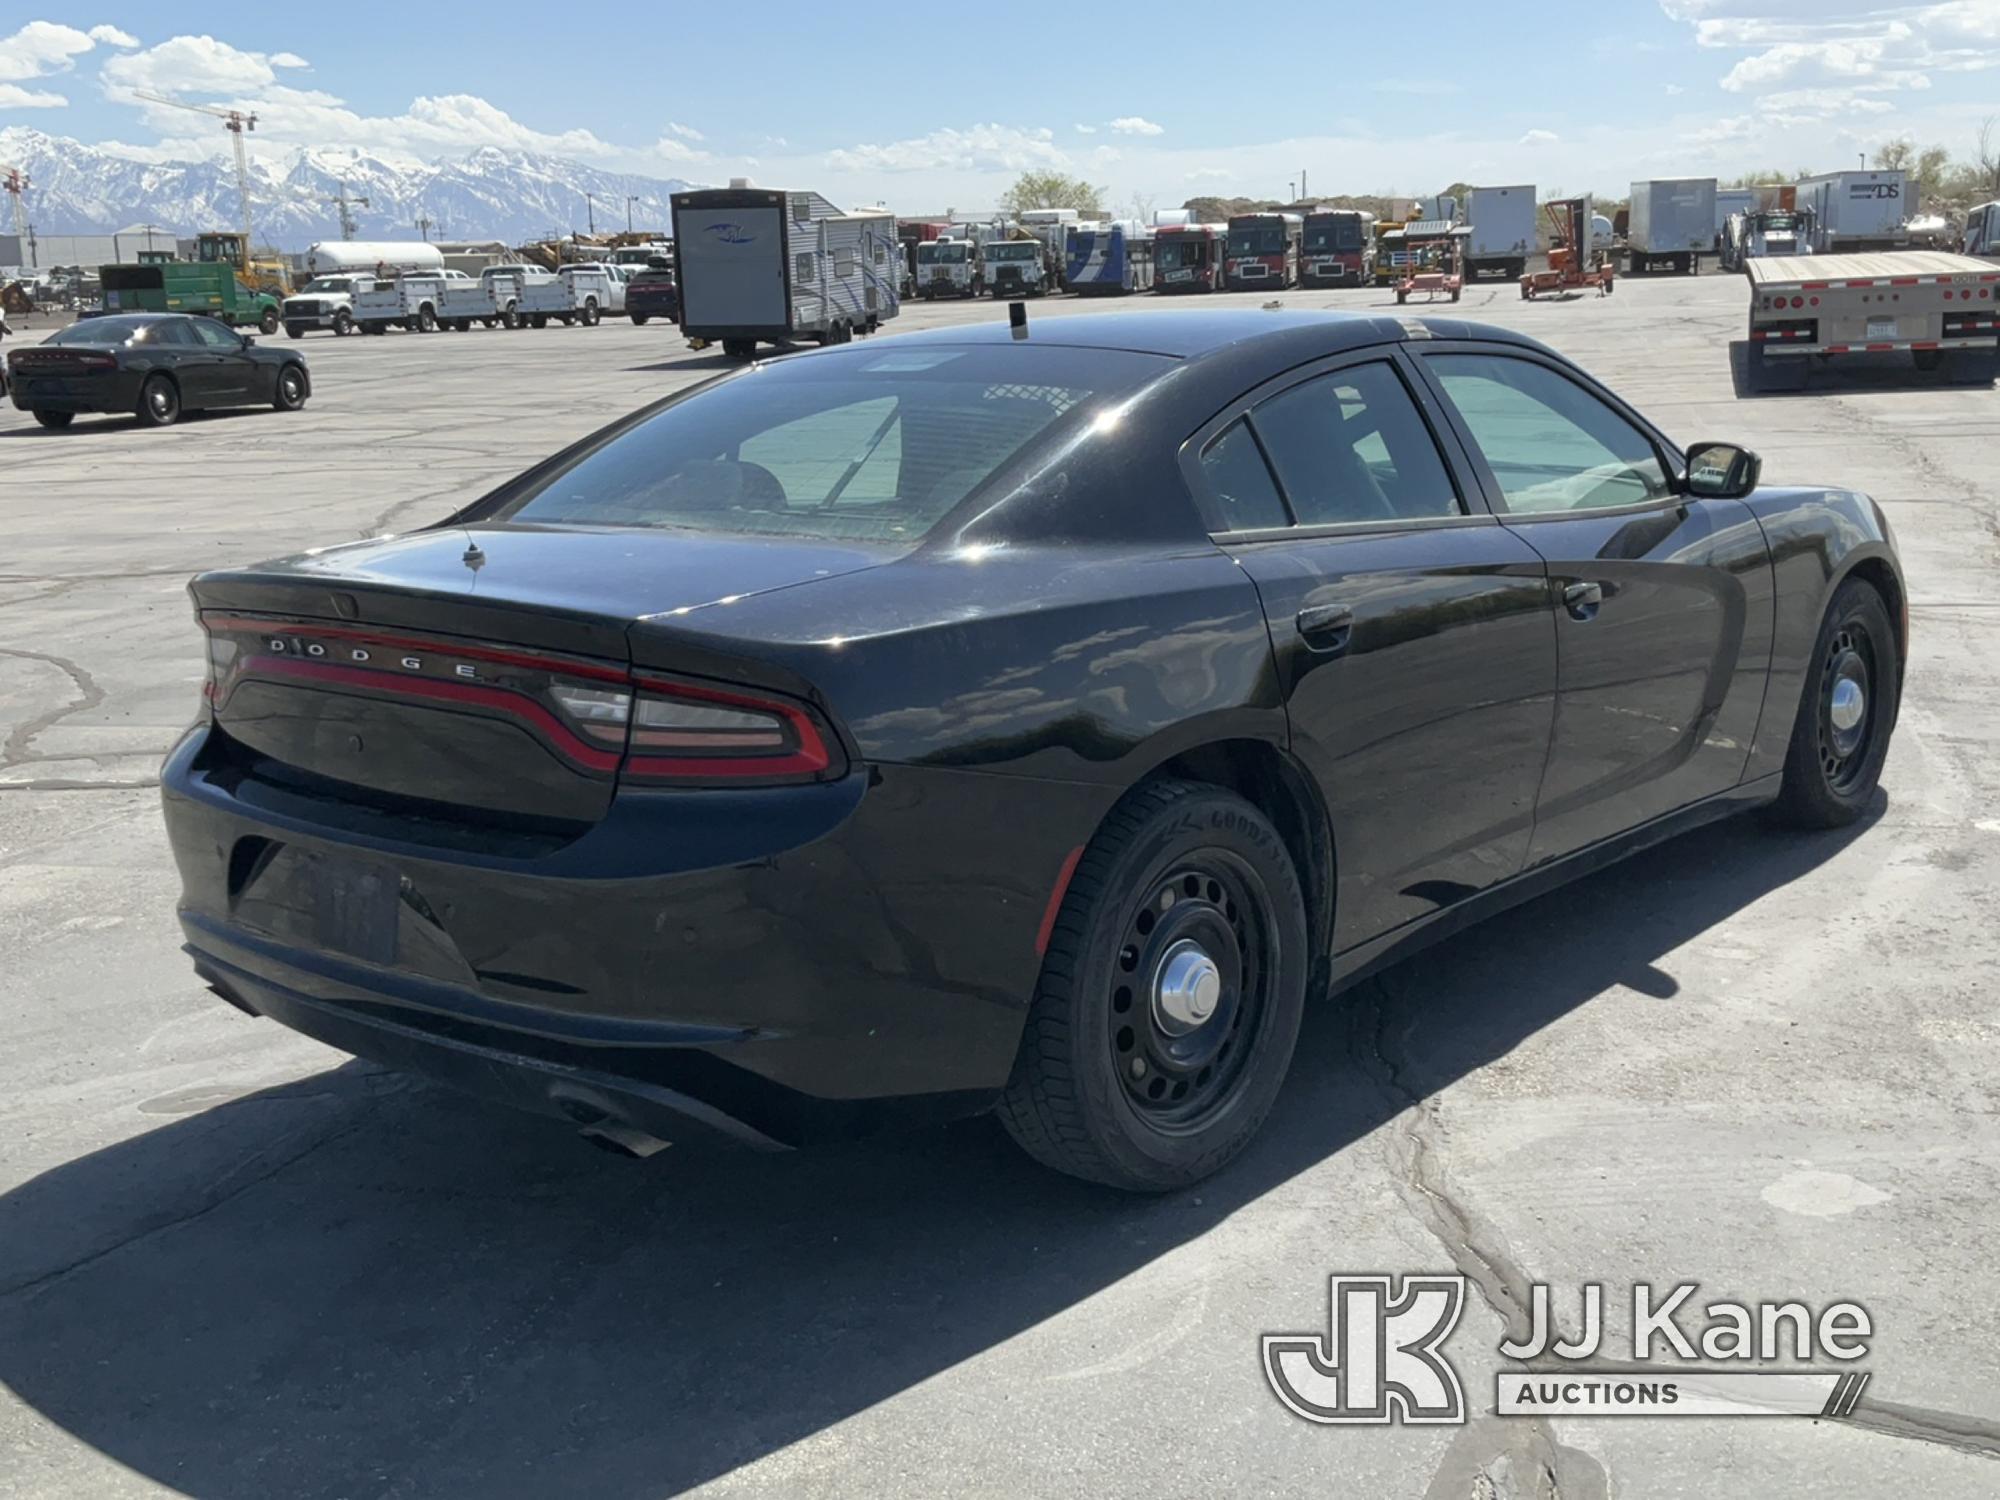 (Salt Lake City, UT) 2016 Dodge Charger Police Package 4-Door Sedan Runs & Moves